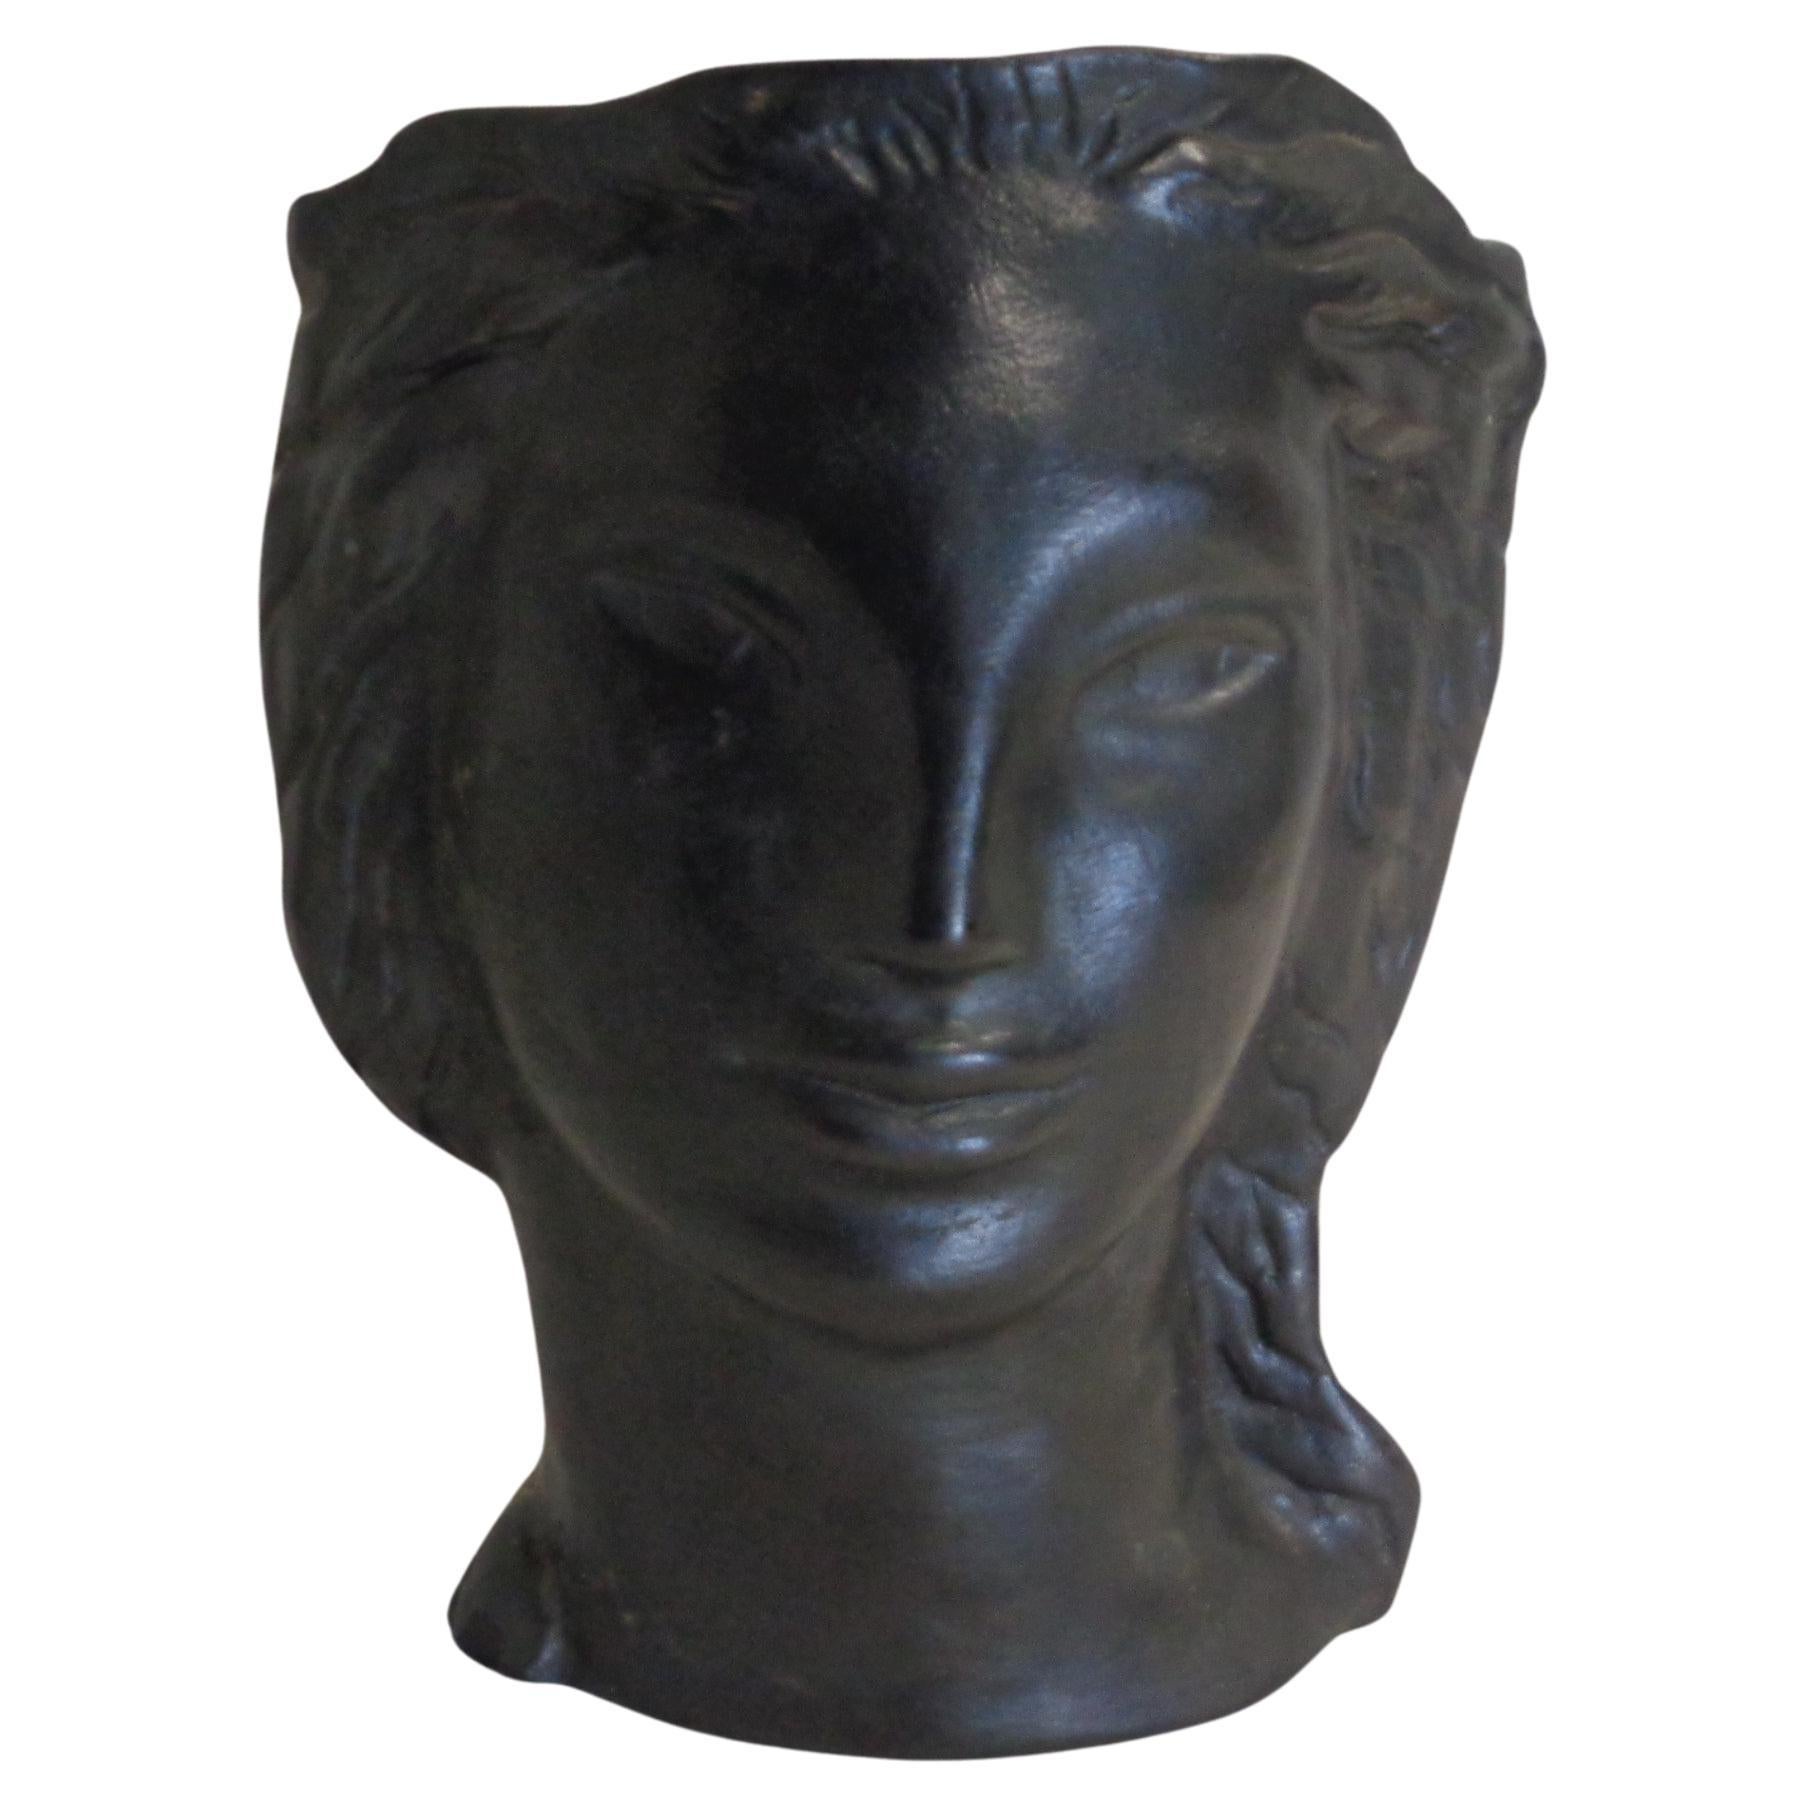   Art Deco Ceramic Exotic Head Vase Sculpture by Edith Varian Cockcroft